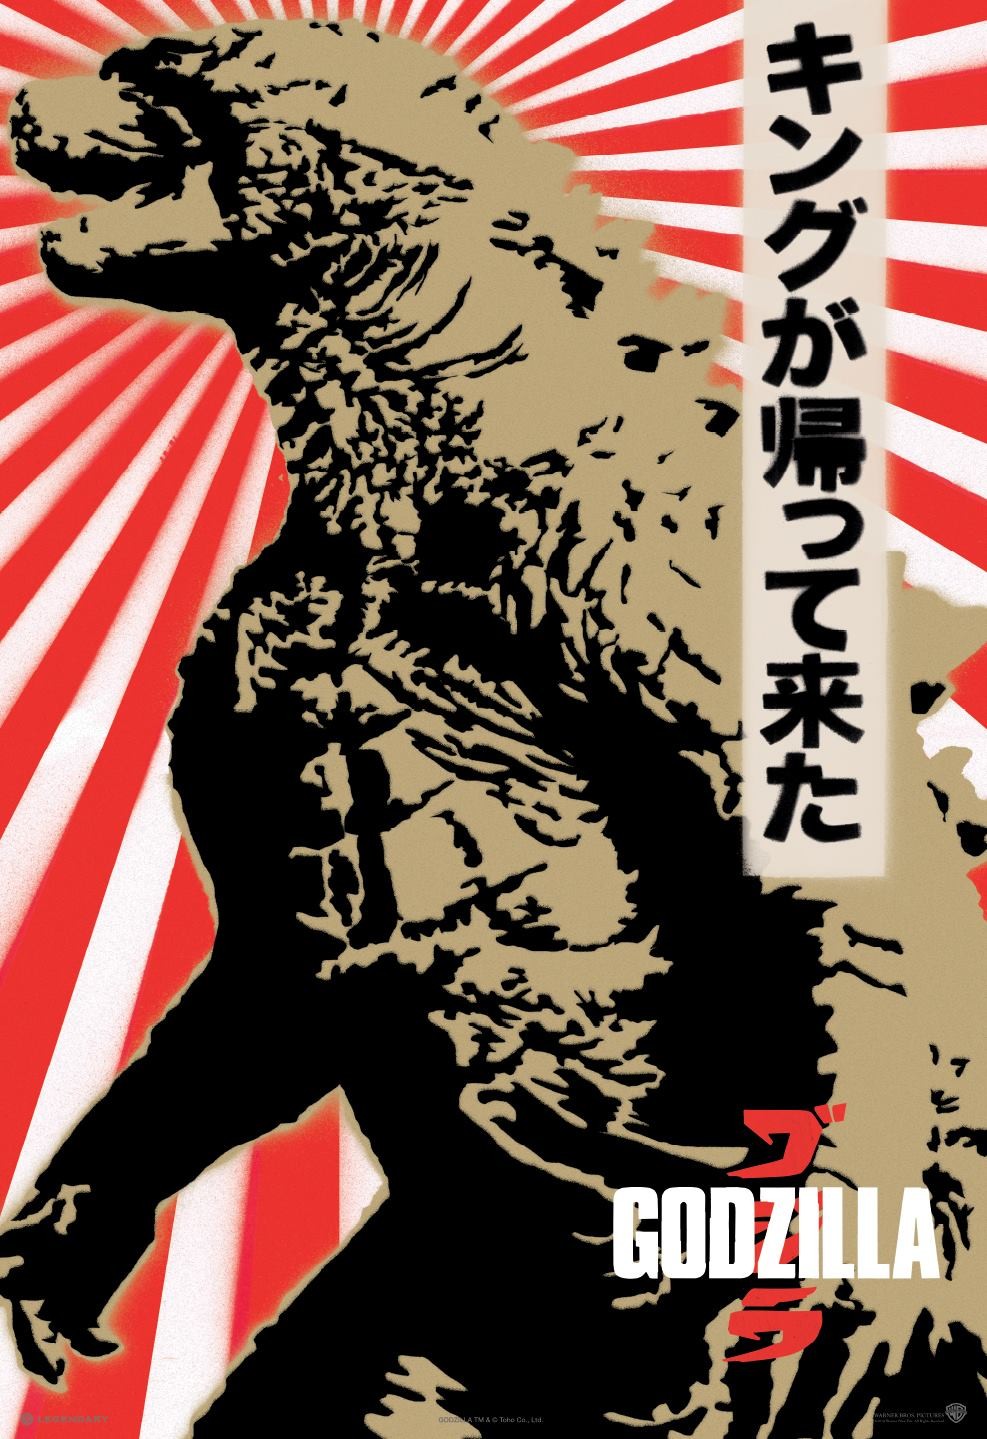 Extra Large Movie Poster Image for Godzilla (#11 of 22)